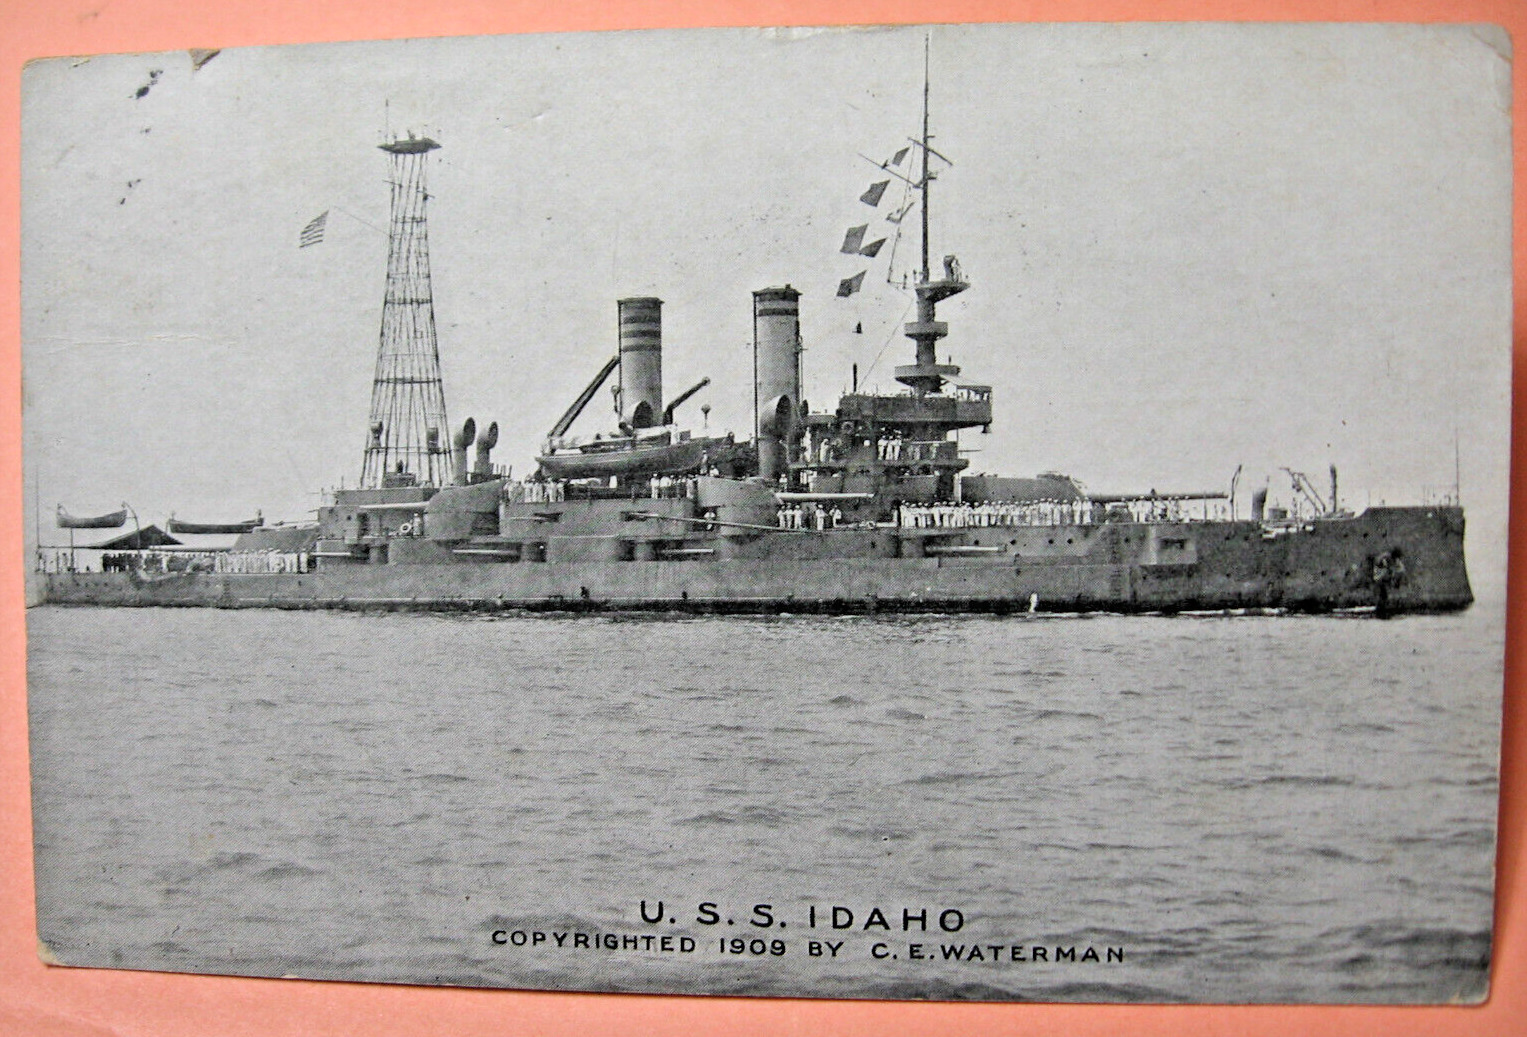 1909 U.S.S. Idaho copyright postcard